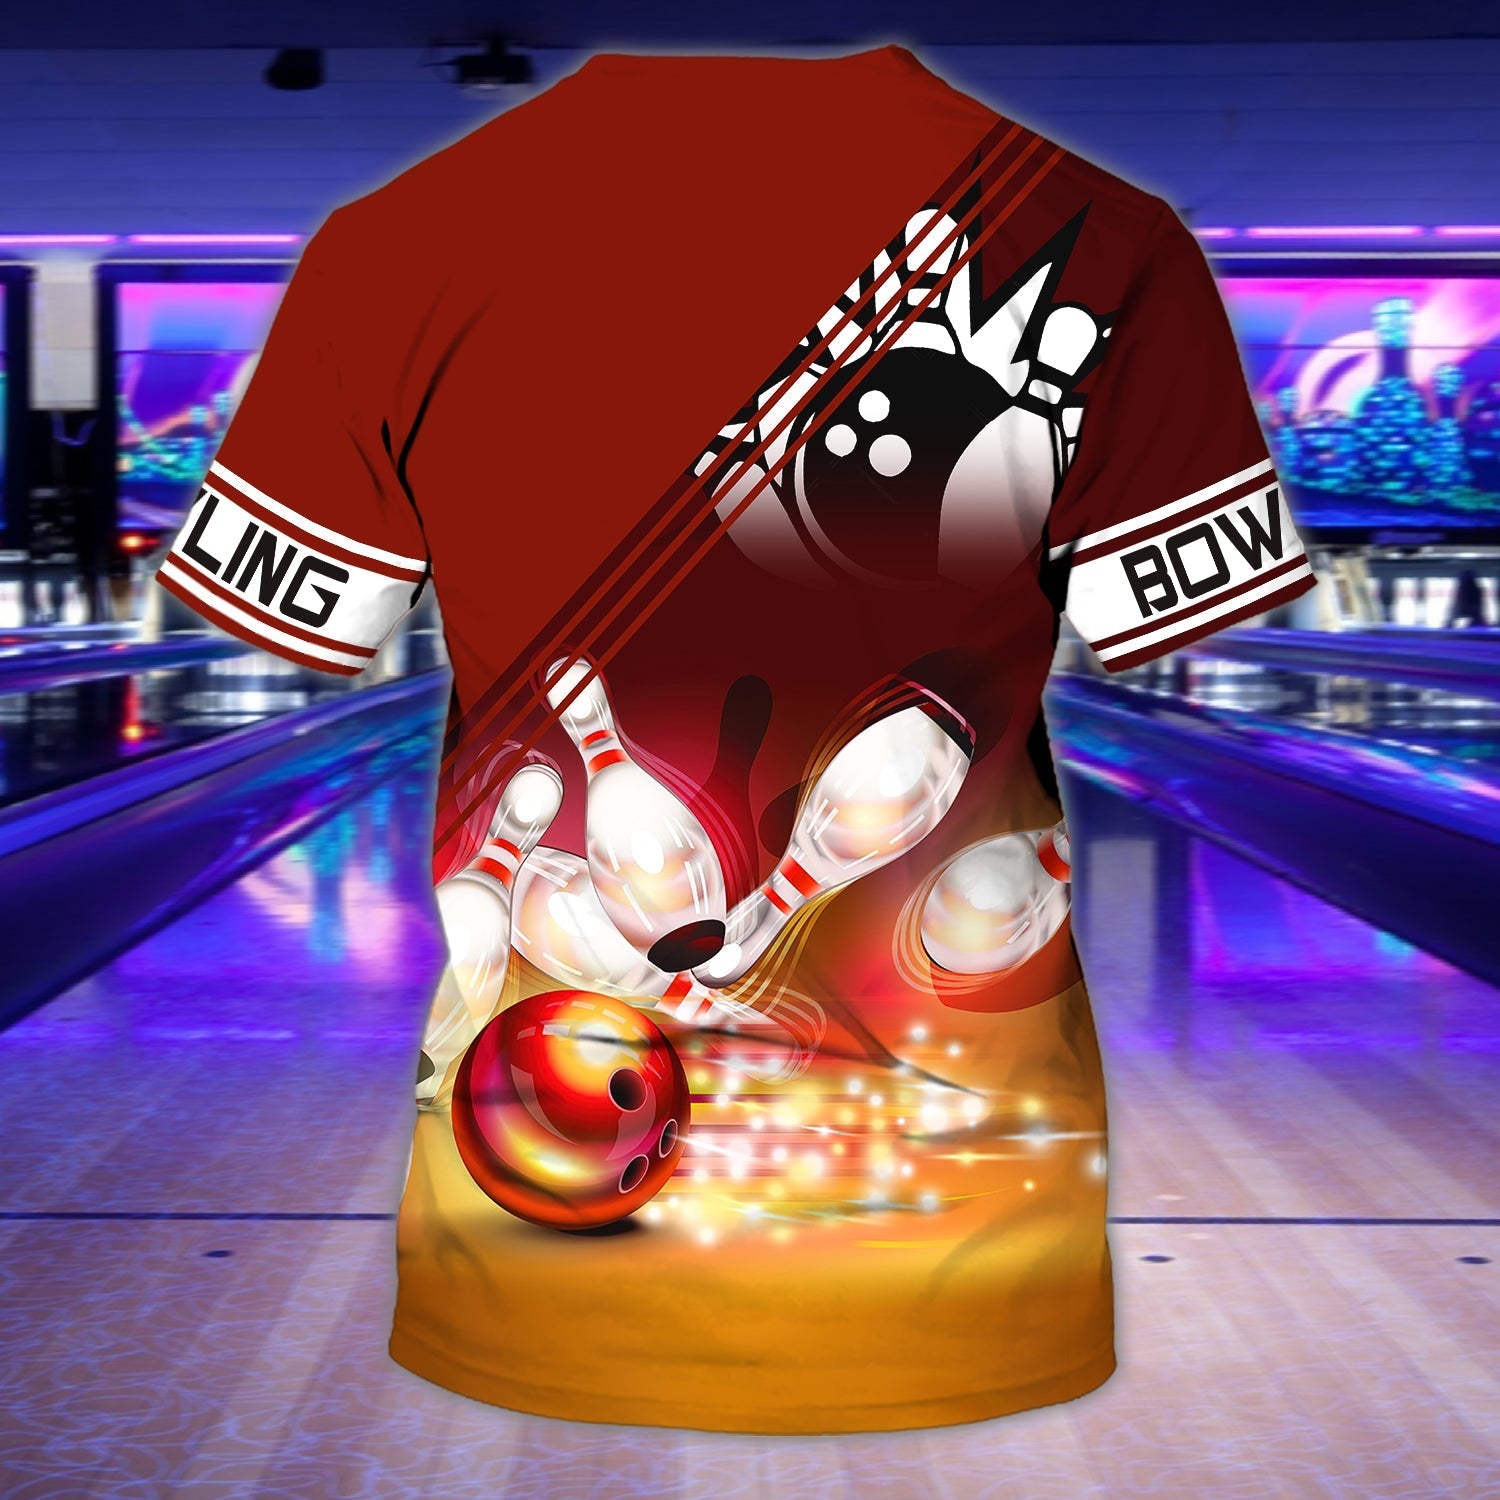 Customized Love Bowling Tshirt/ Colorful Bowling Shirts For Men And Women/ Bowling Tshirt